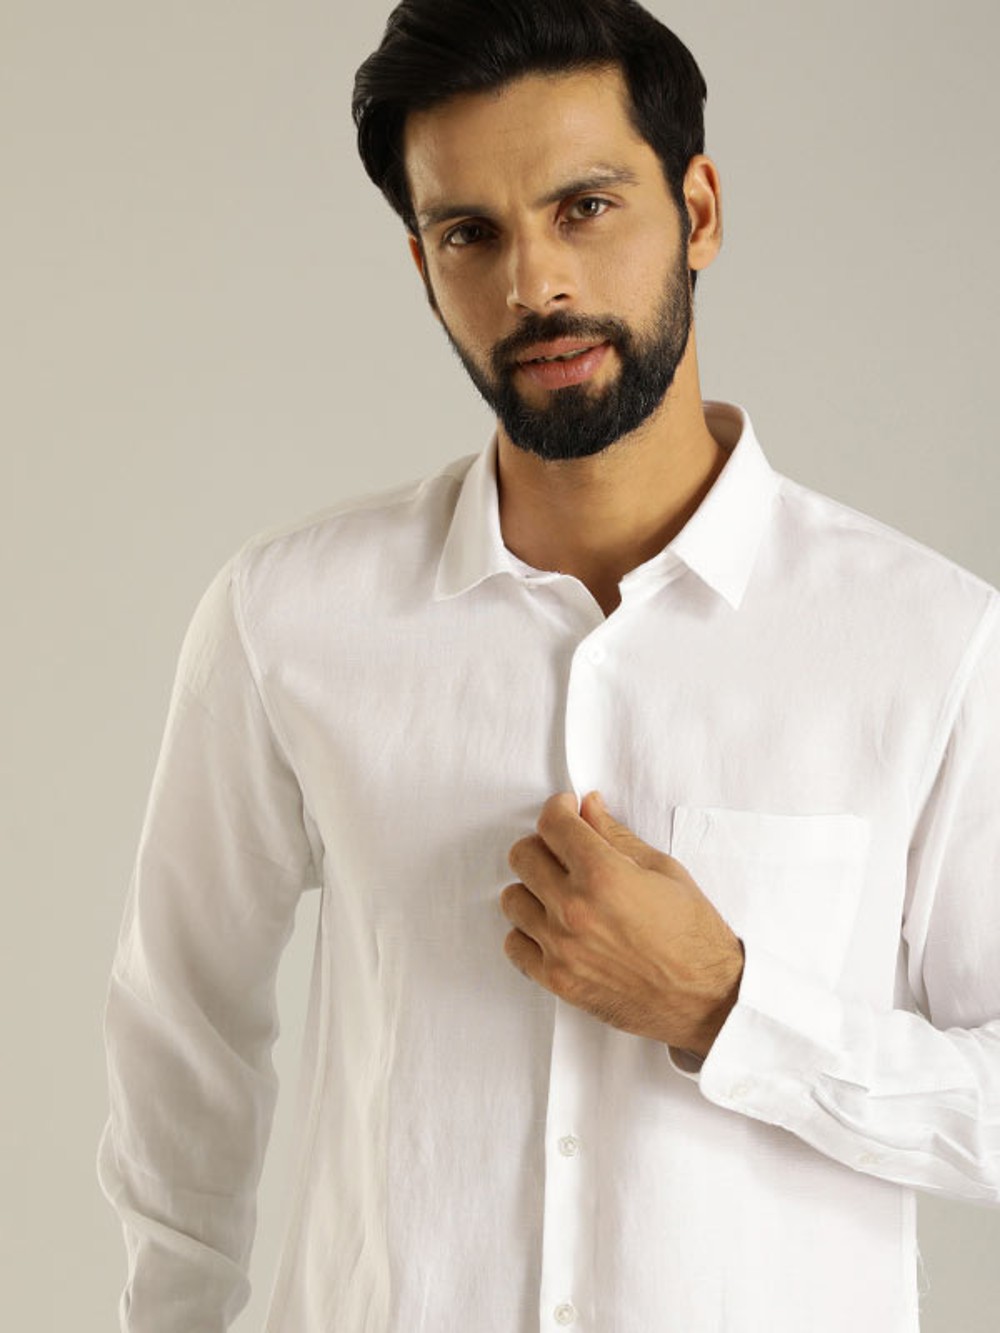 Buy Men White Classic Fit Solid Full Sleeves Formal Shirt Online